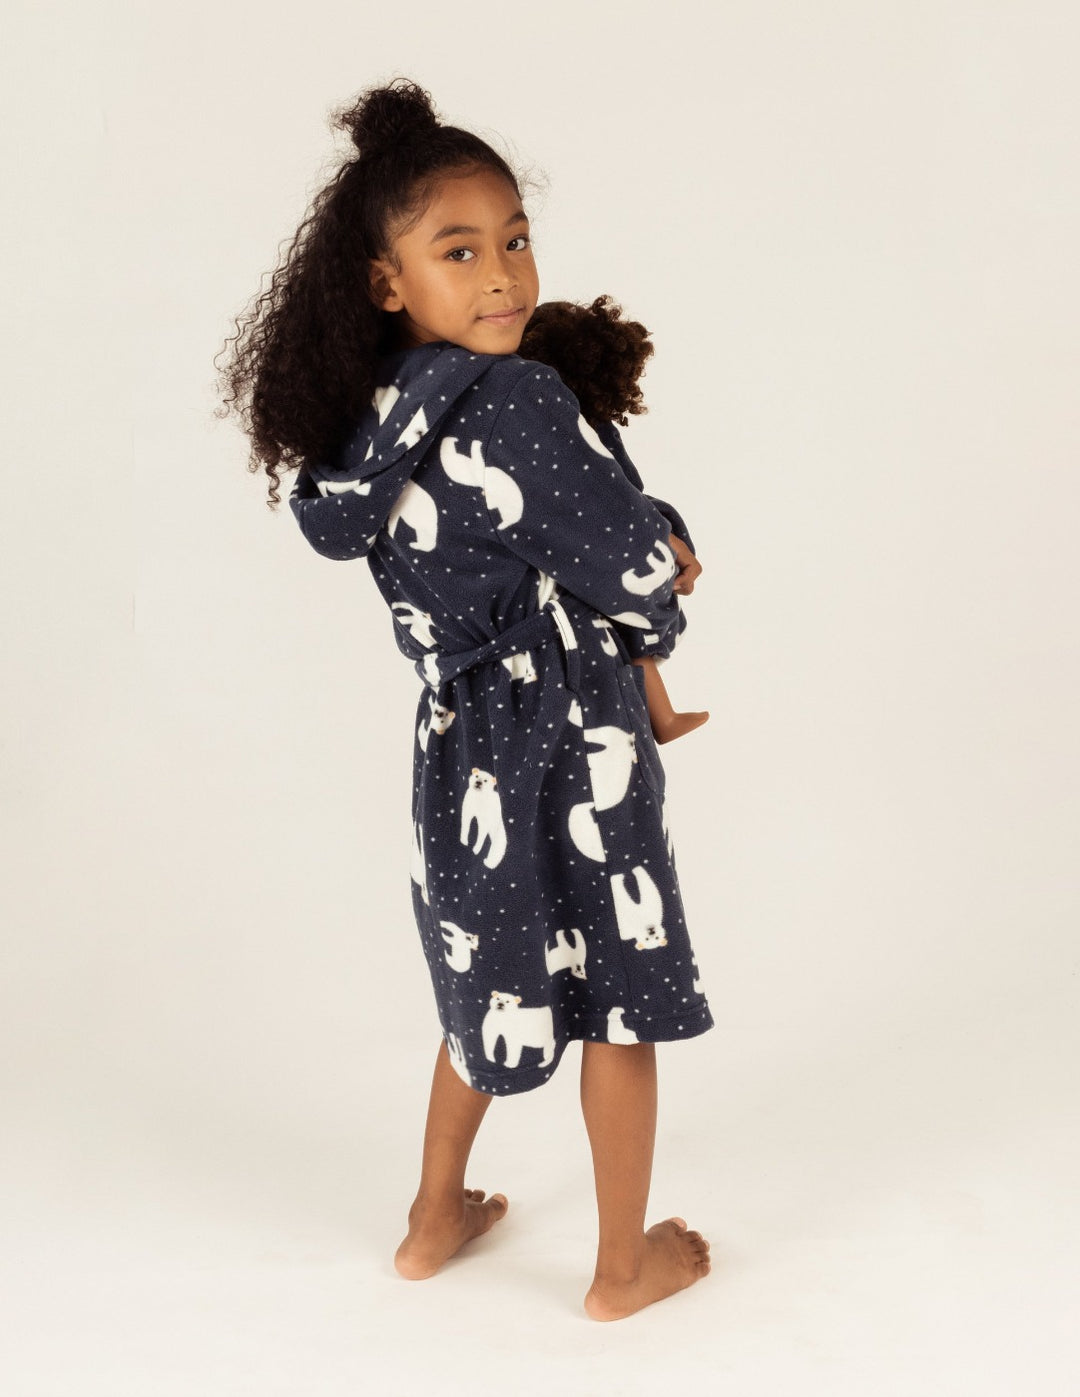 Polar Bear Fleece Girls Pajamas in Kid's Fleece Styles, Pajamas for Kids